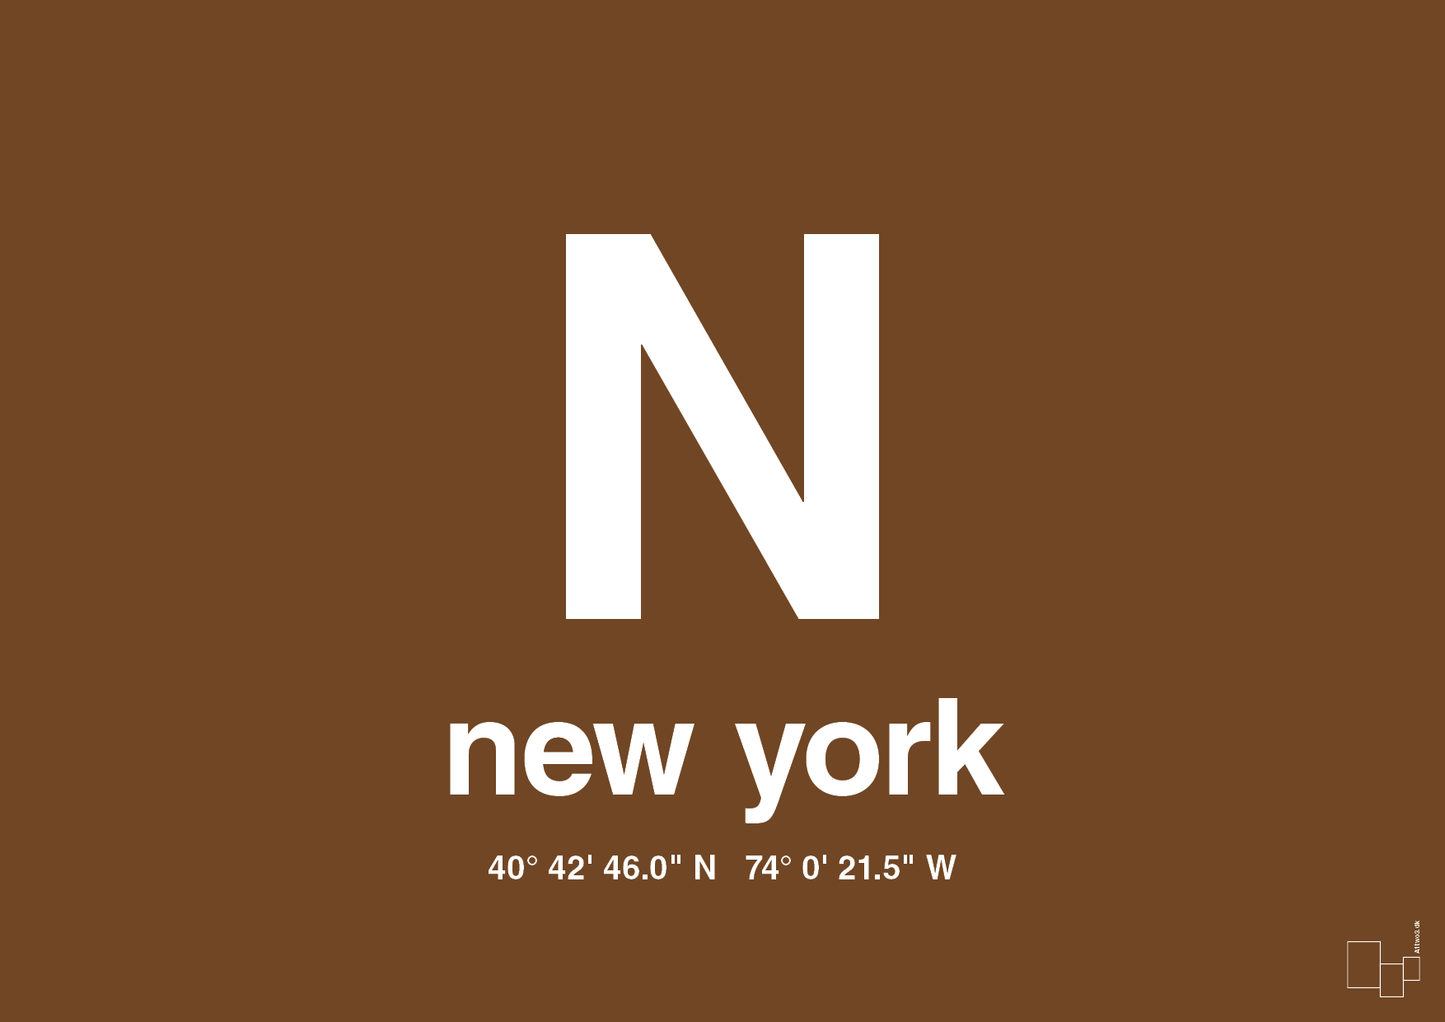 byplakat new york med koordinater - Plakat med Grafik i Dark Brown